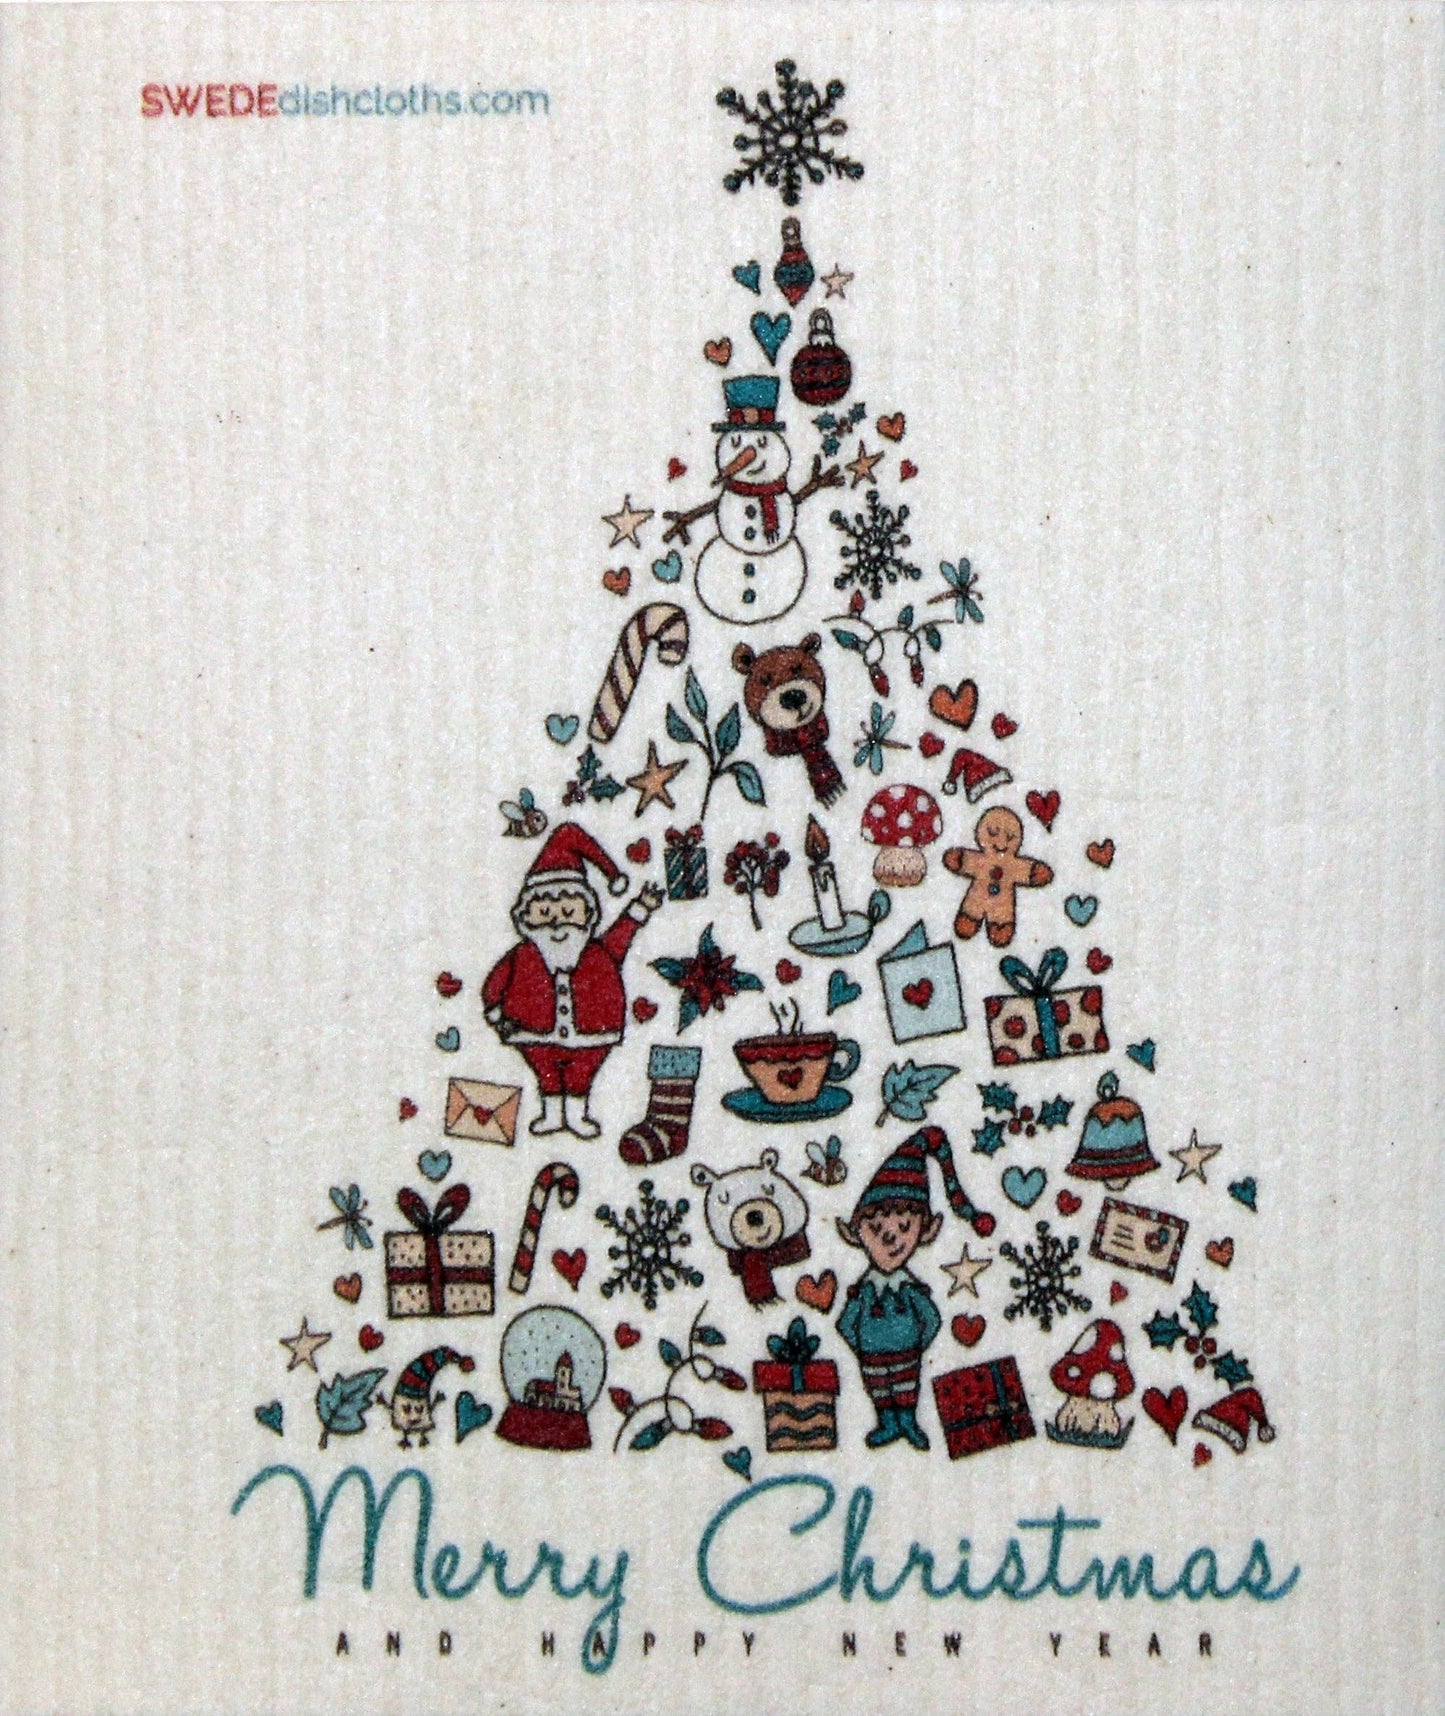 SWEDEdishcloths -Swedish Dishcloths Christmas Tree Collage